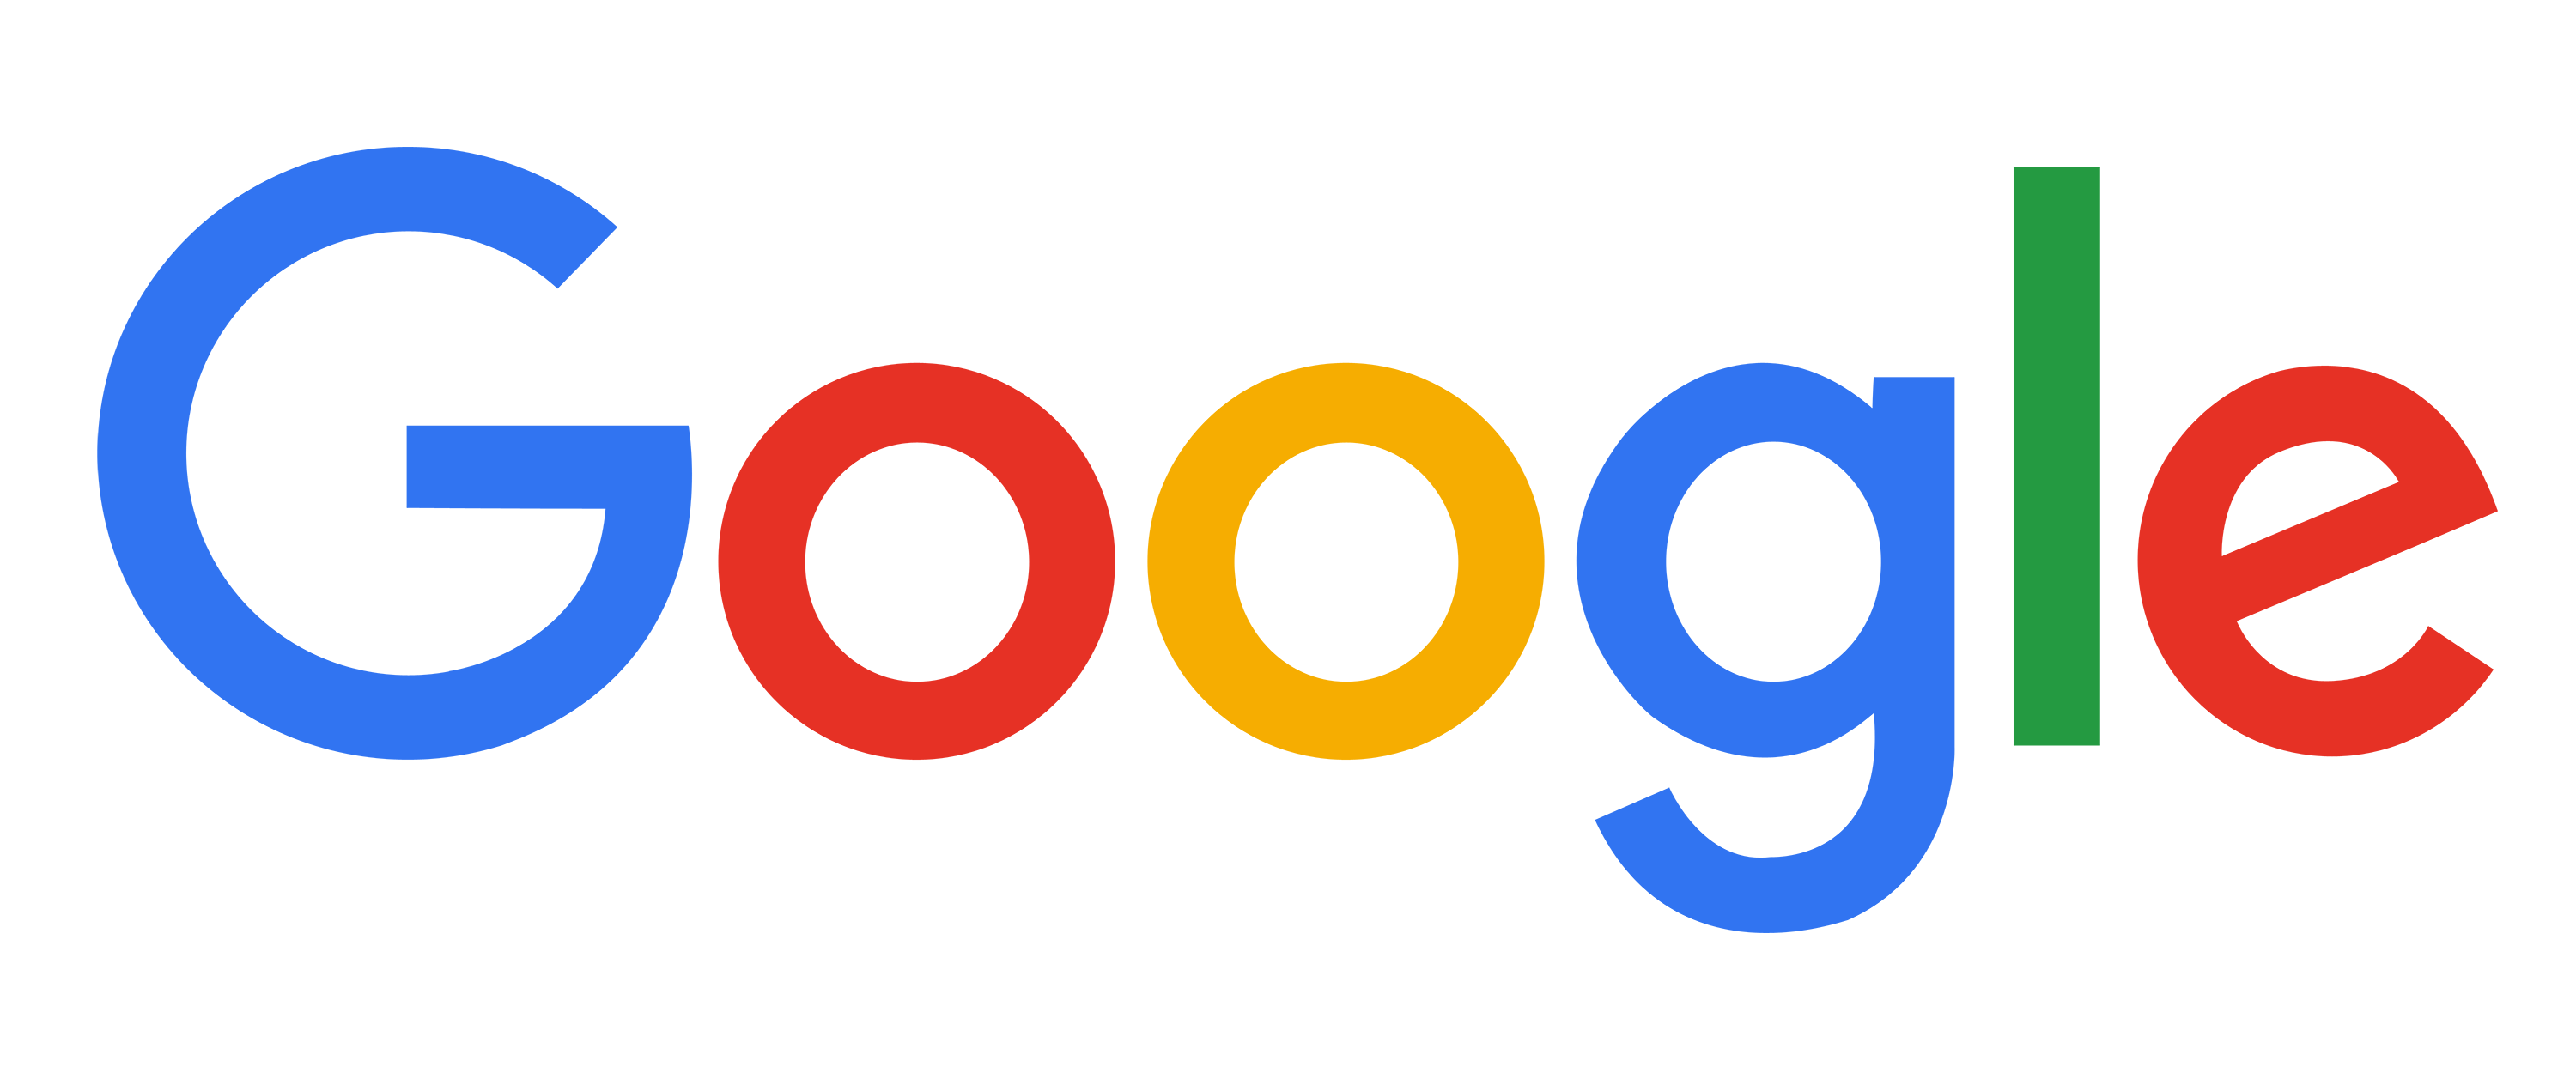 logo google 2